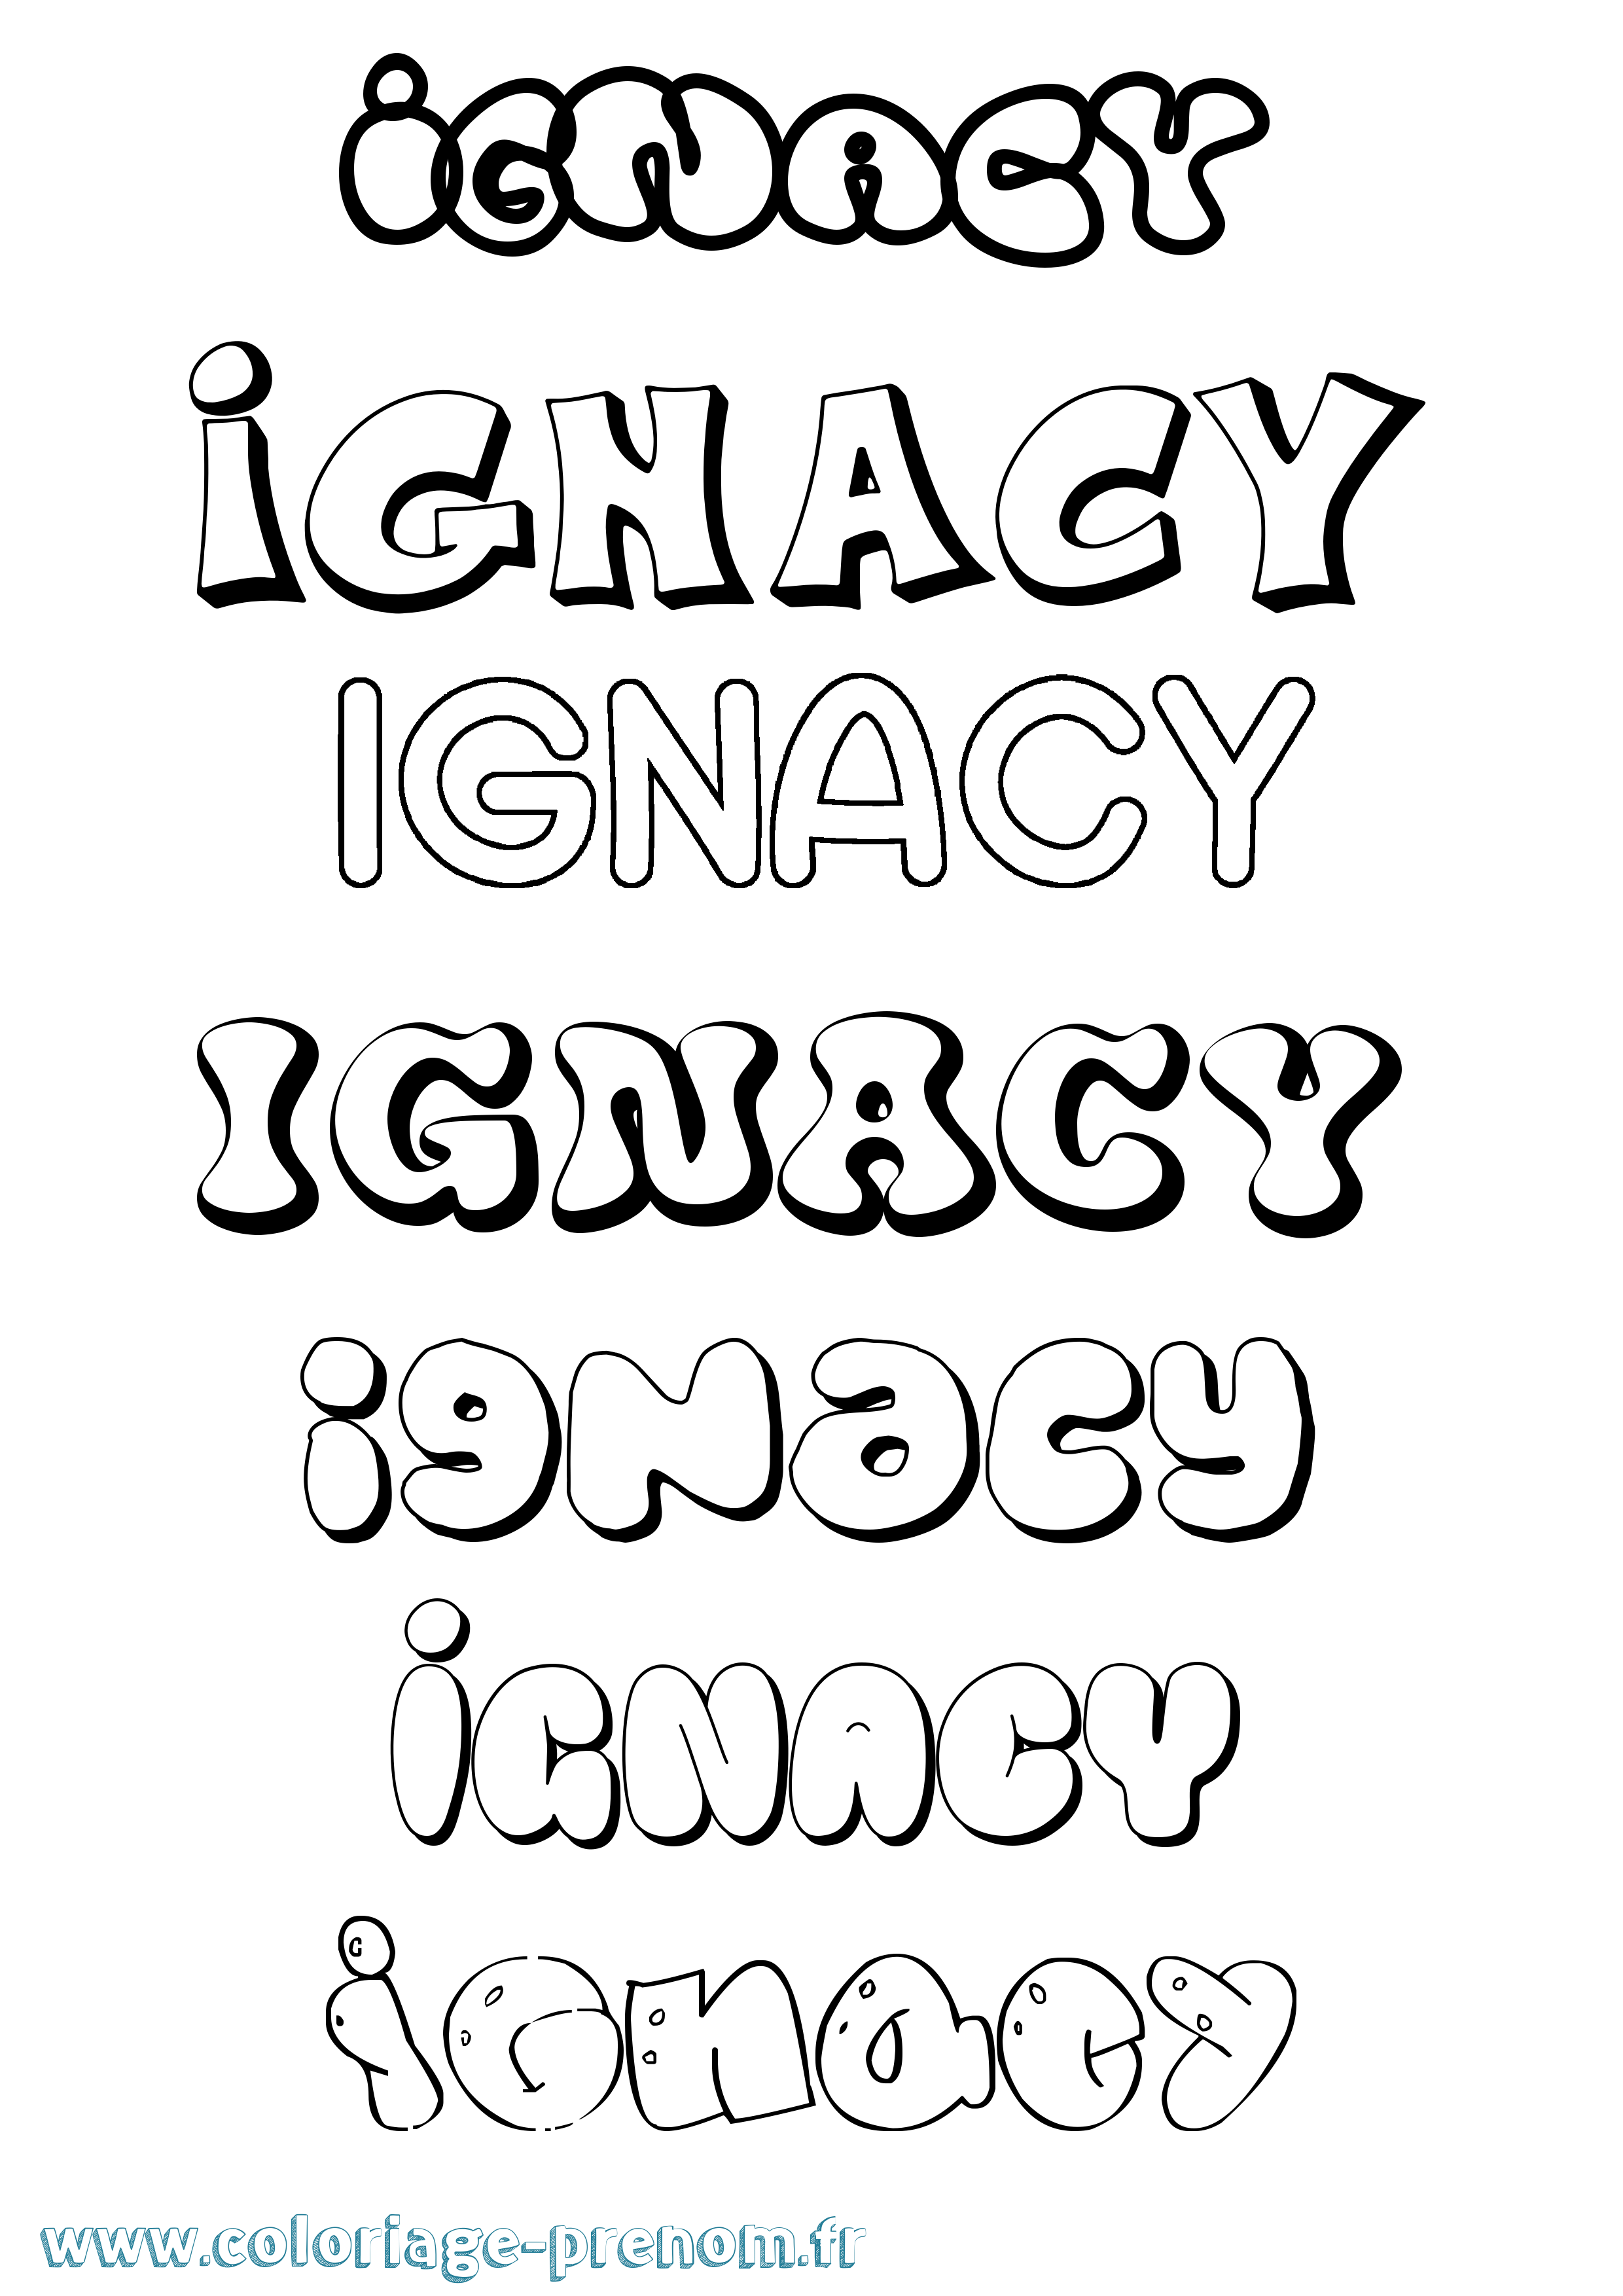 Coloriage prénom Ignacy Bubble